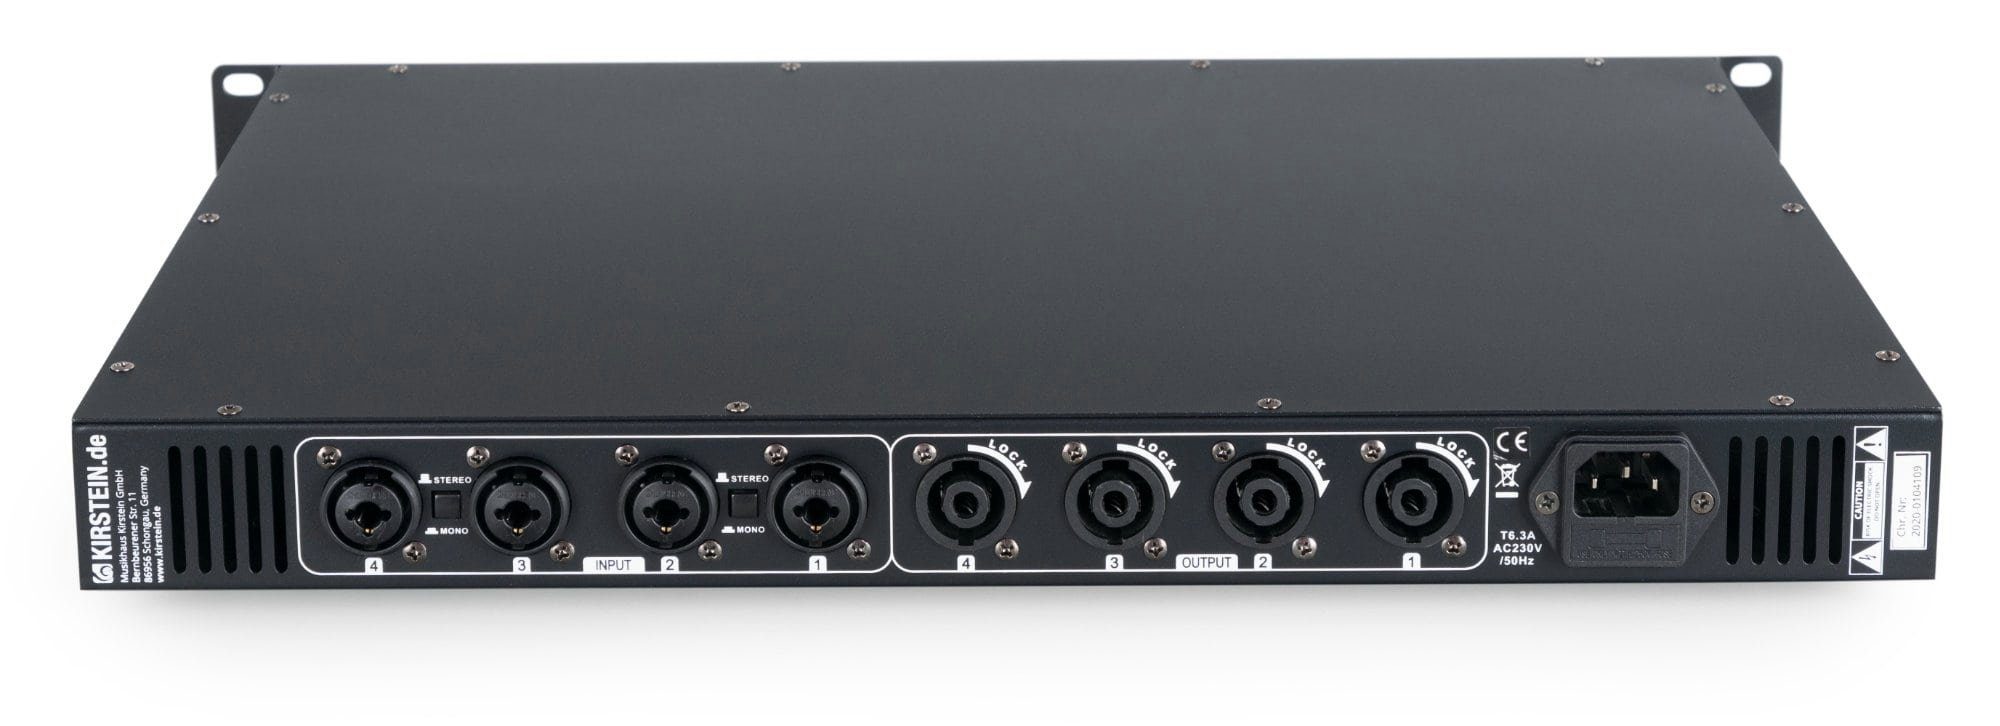 Pronomic P-154E MKII Endstufe 1HE Audioverstärker (Anzahl Kanäle: 4, 600 W,  geeignet für Monitor-Betrieb oder Studio/HiFi)